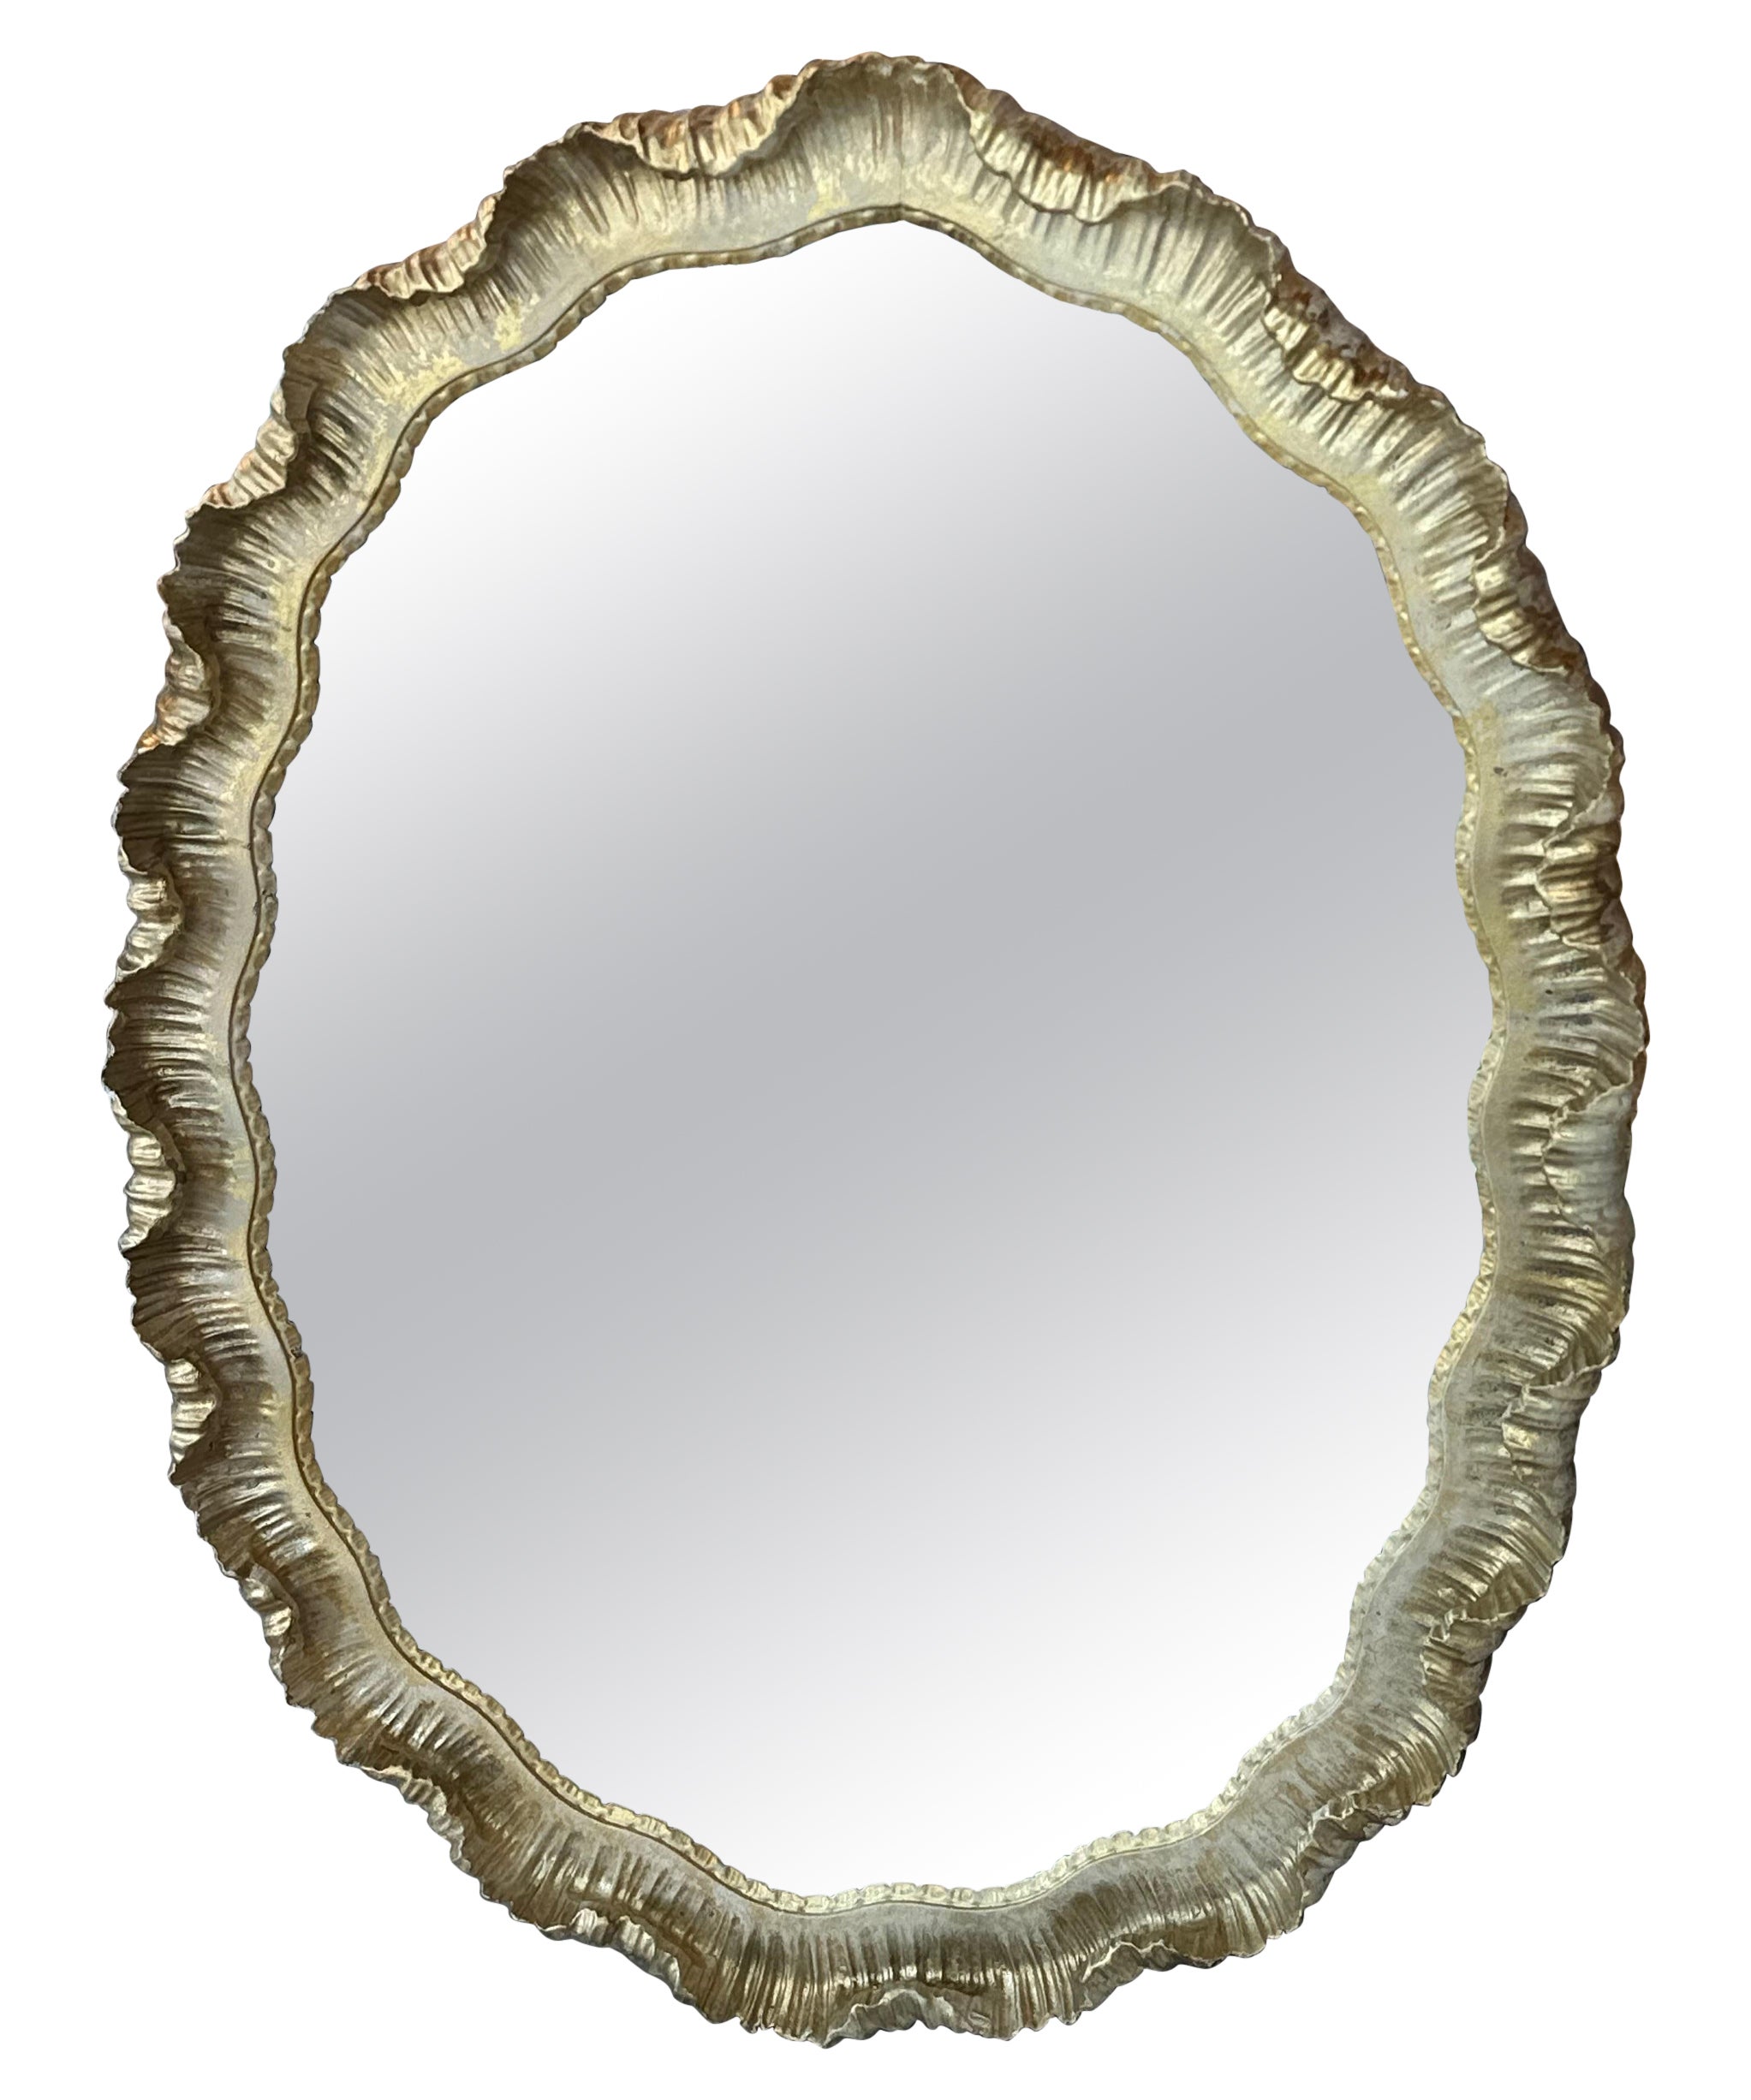 Venetian Italian Gold Gilt Wood Gesso Scalloped Ruffle Oval Wall Mirror 